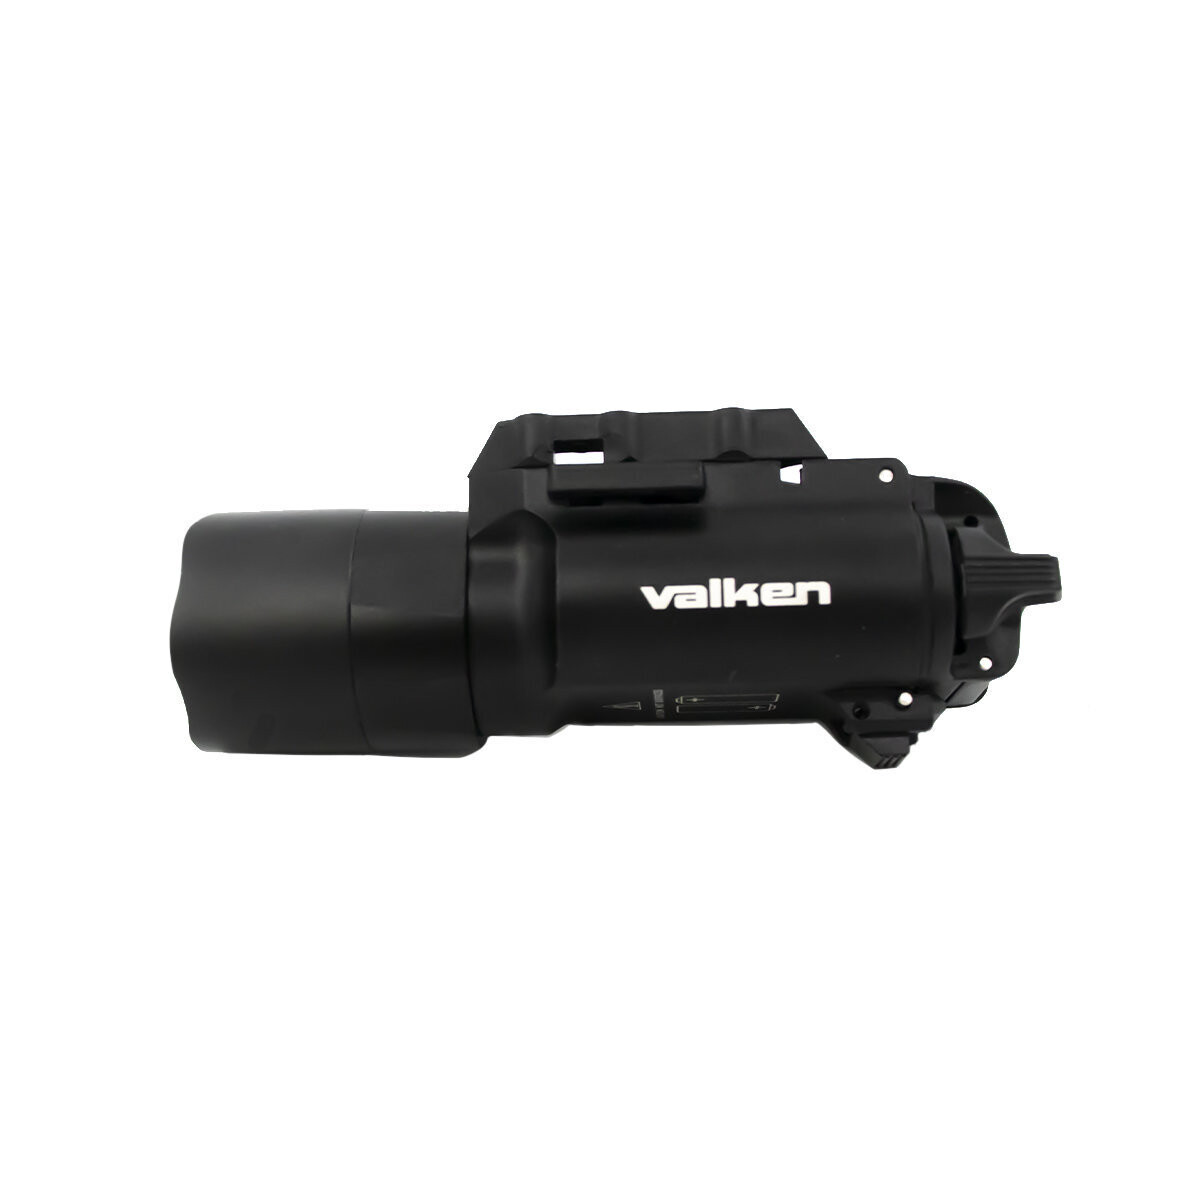 Valken 500 Lumen LED Weaponlite w/ Pistol and Picatinny Mount